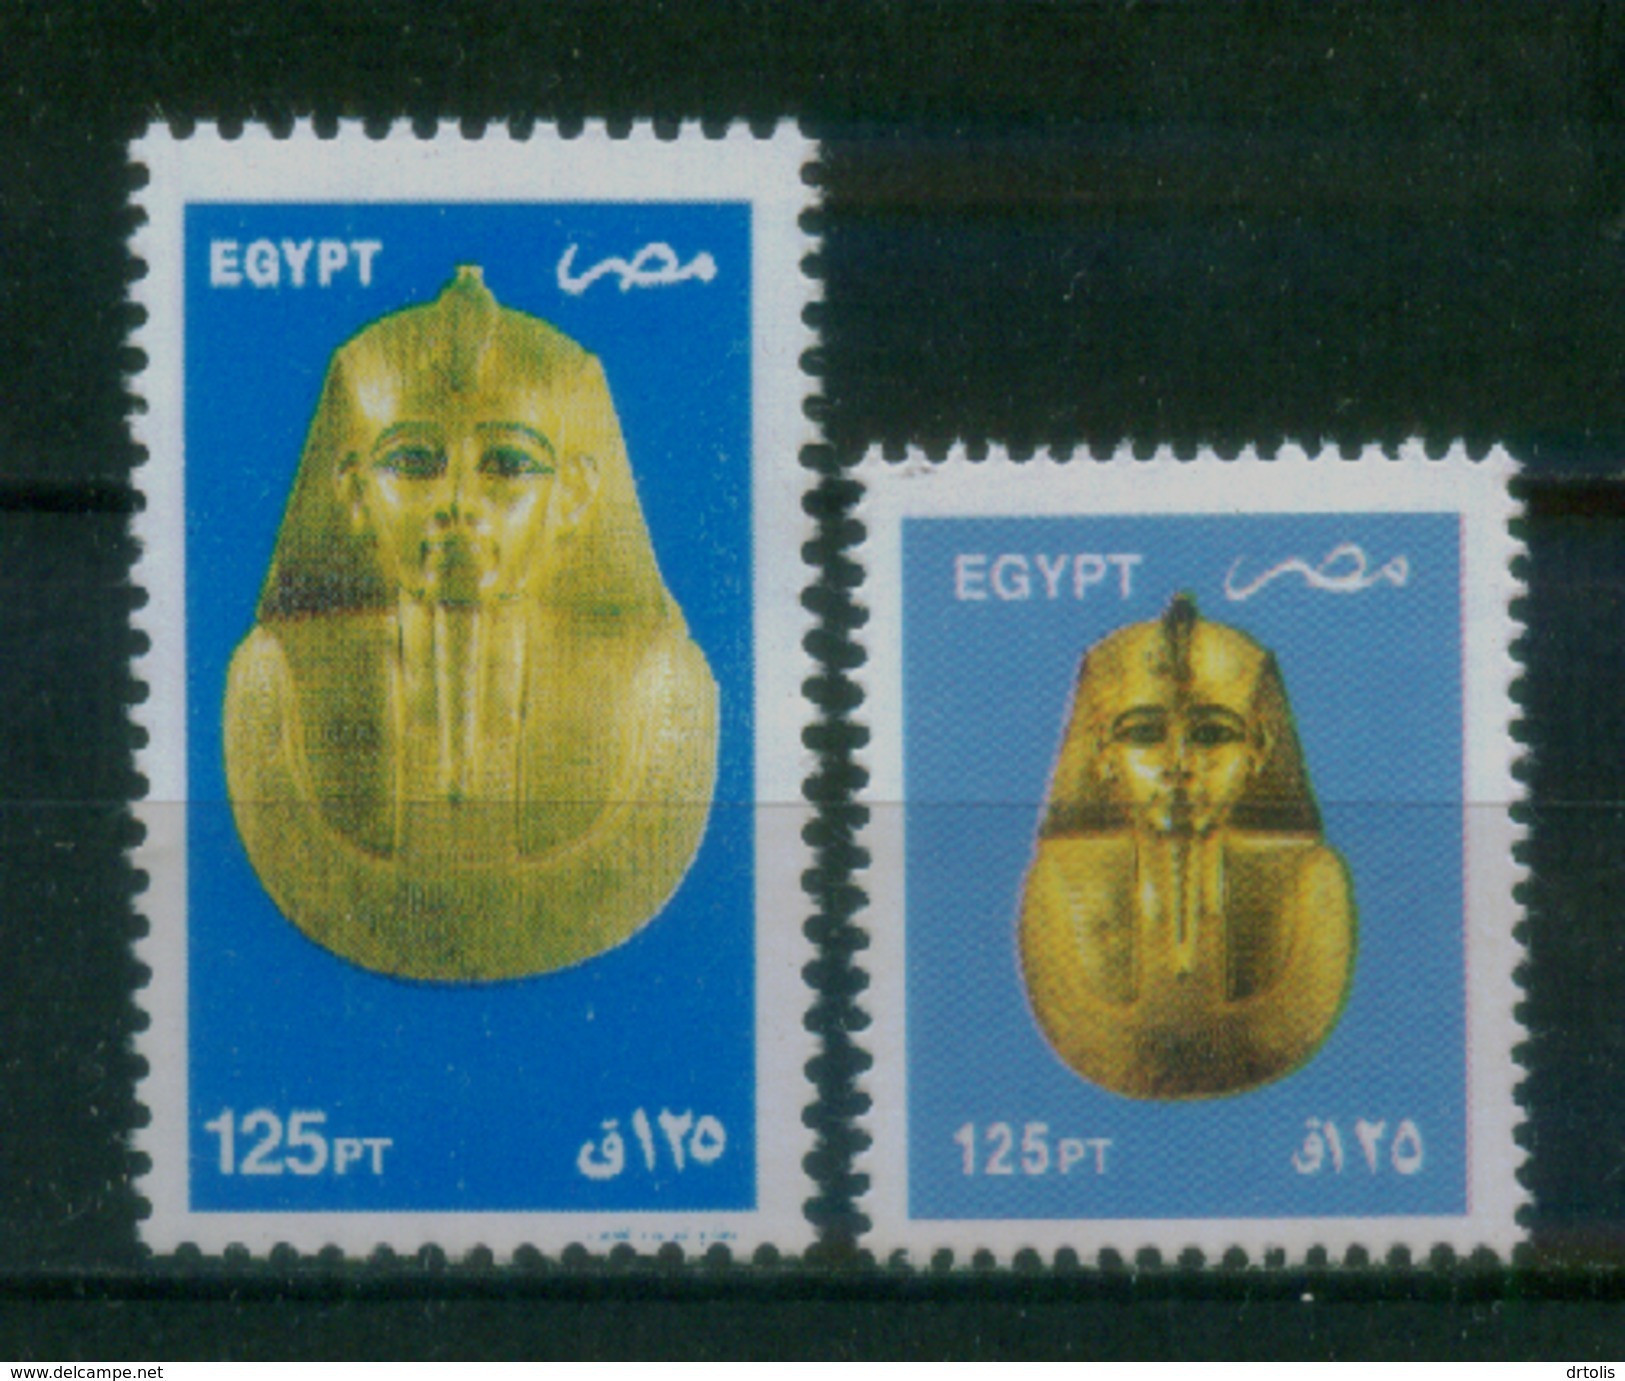 EGYPT / 2002 & 2017 / PSUSENNES I (BUST) / EGYPTOLOGY / ARCHEOLOGY / EGYPT ANTIQUITY / MNH / VF - Ongebruikt